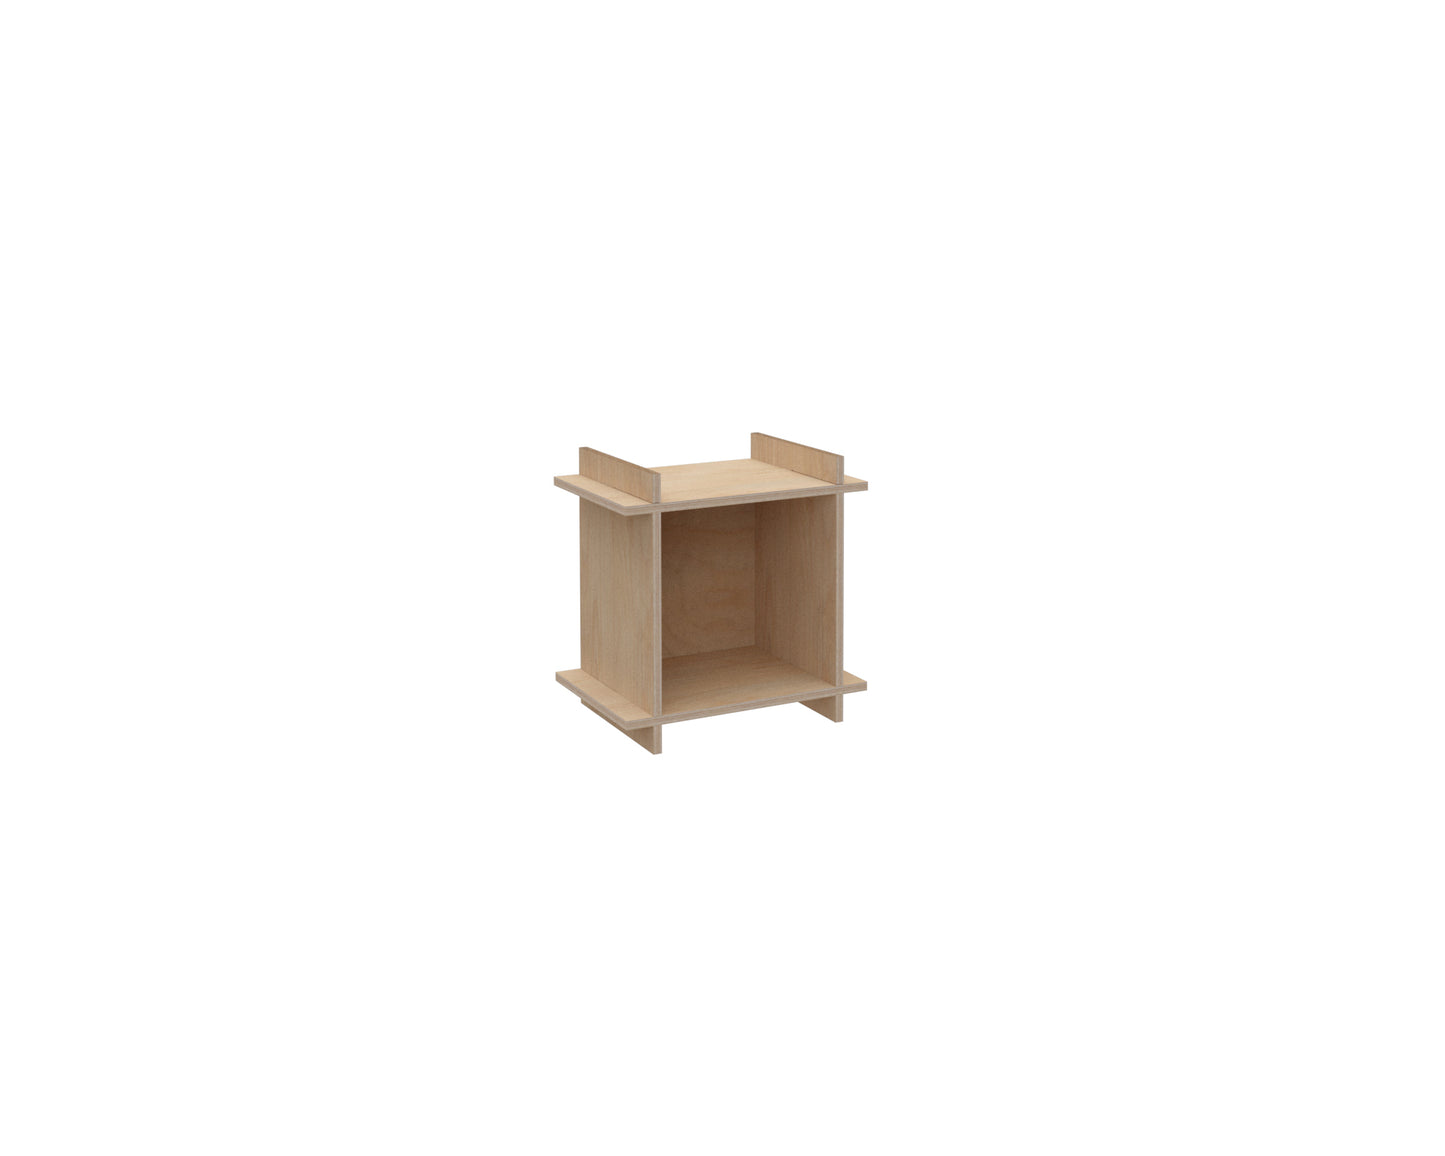 1x1 Modern Modular Bookshelf Unit Nightstand Cubic Shelf 33cm / 13" Kallax module, japandi style, custom design for vinyl records, books, music studio, home - 18x18x13” / 46x46x33cm